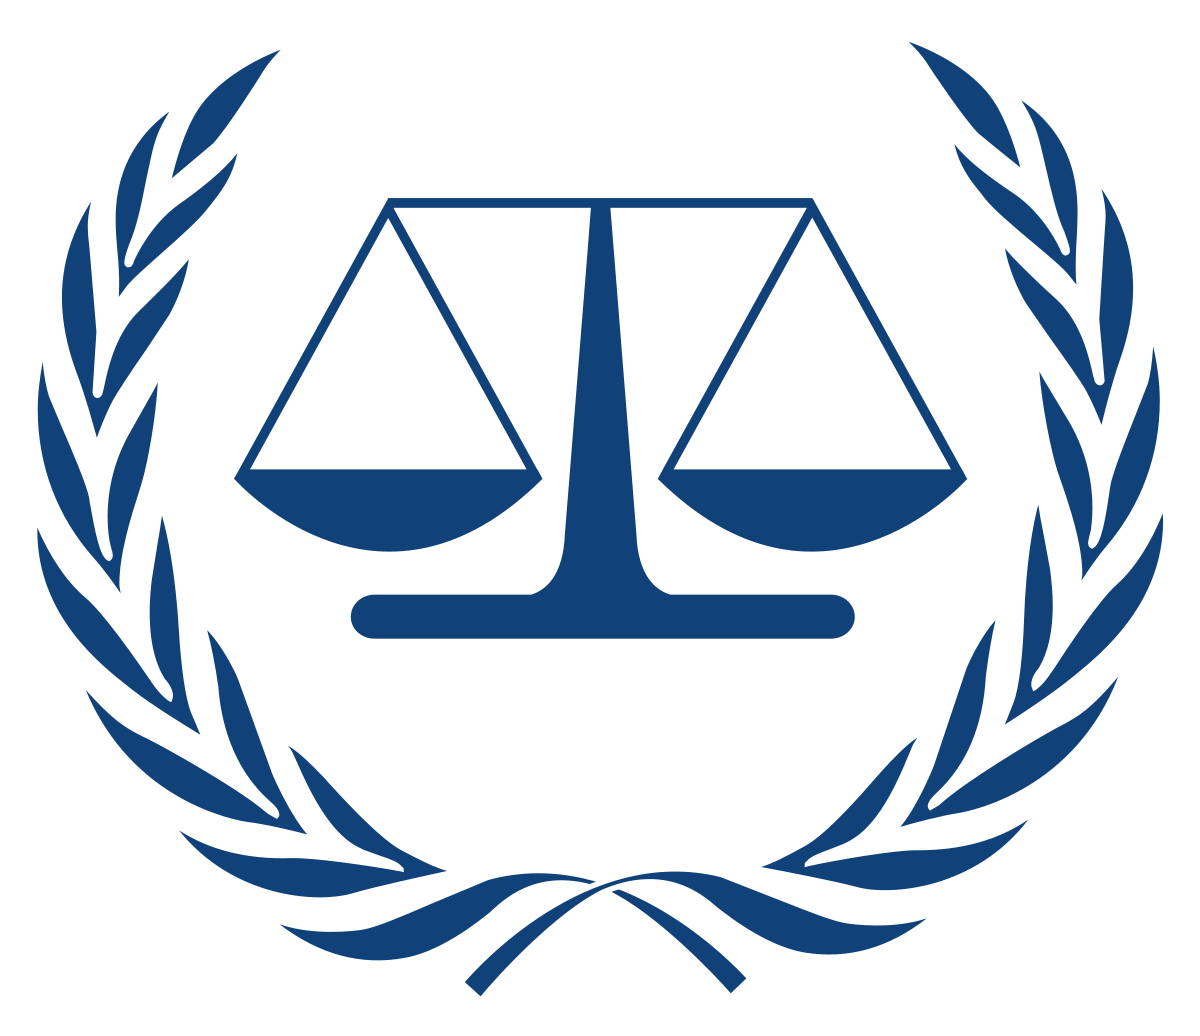 World Court Logo - International Criminal Court